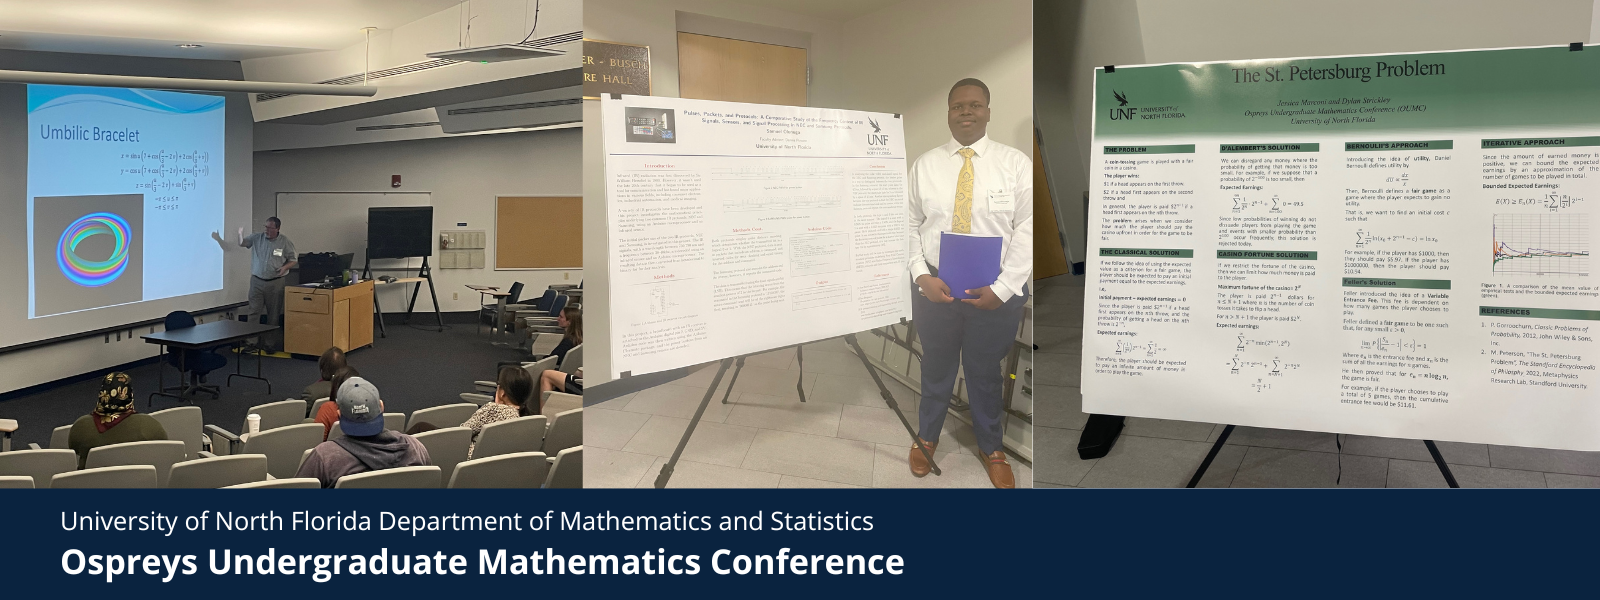 UNF's Department of Mathematics and Statistics Ospreys Undergraduate Mathematics Conference 